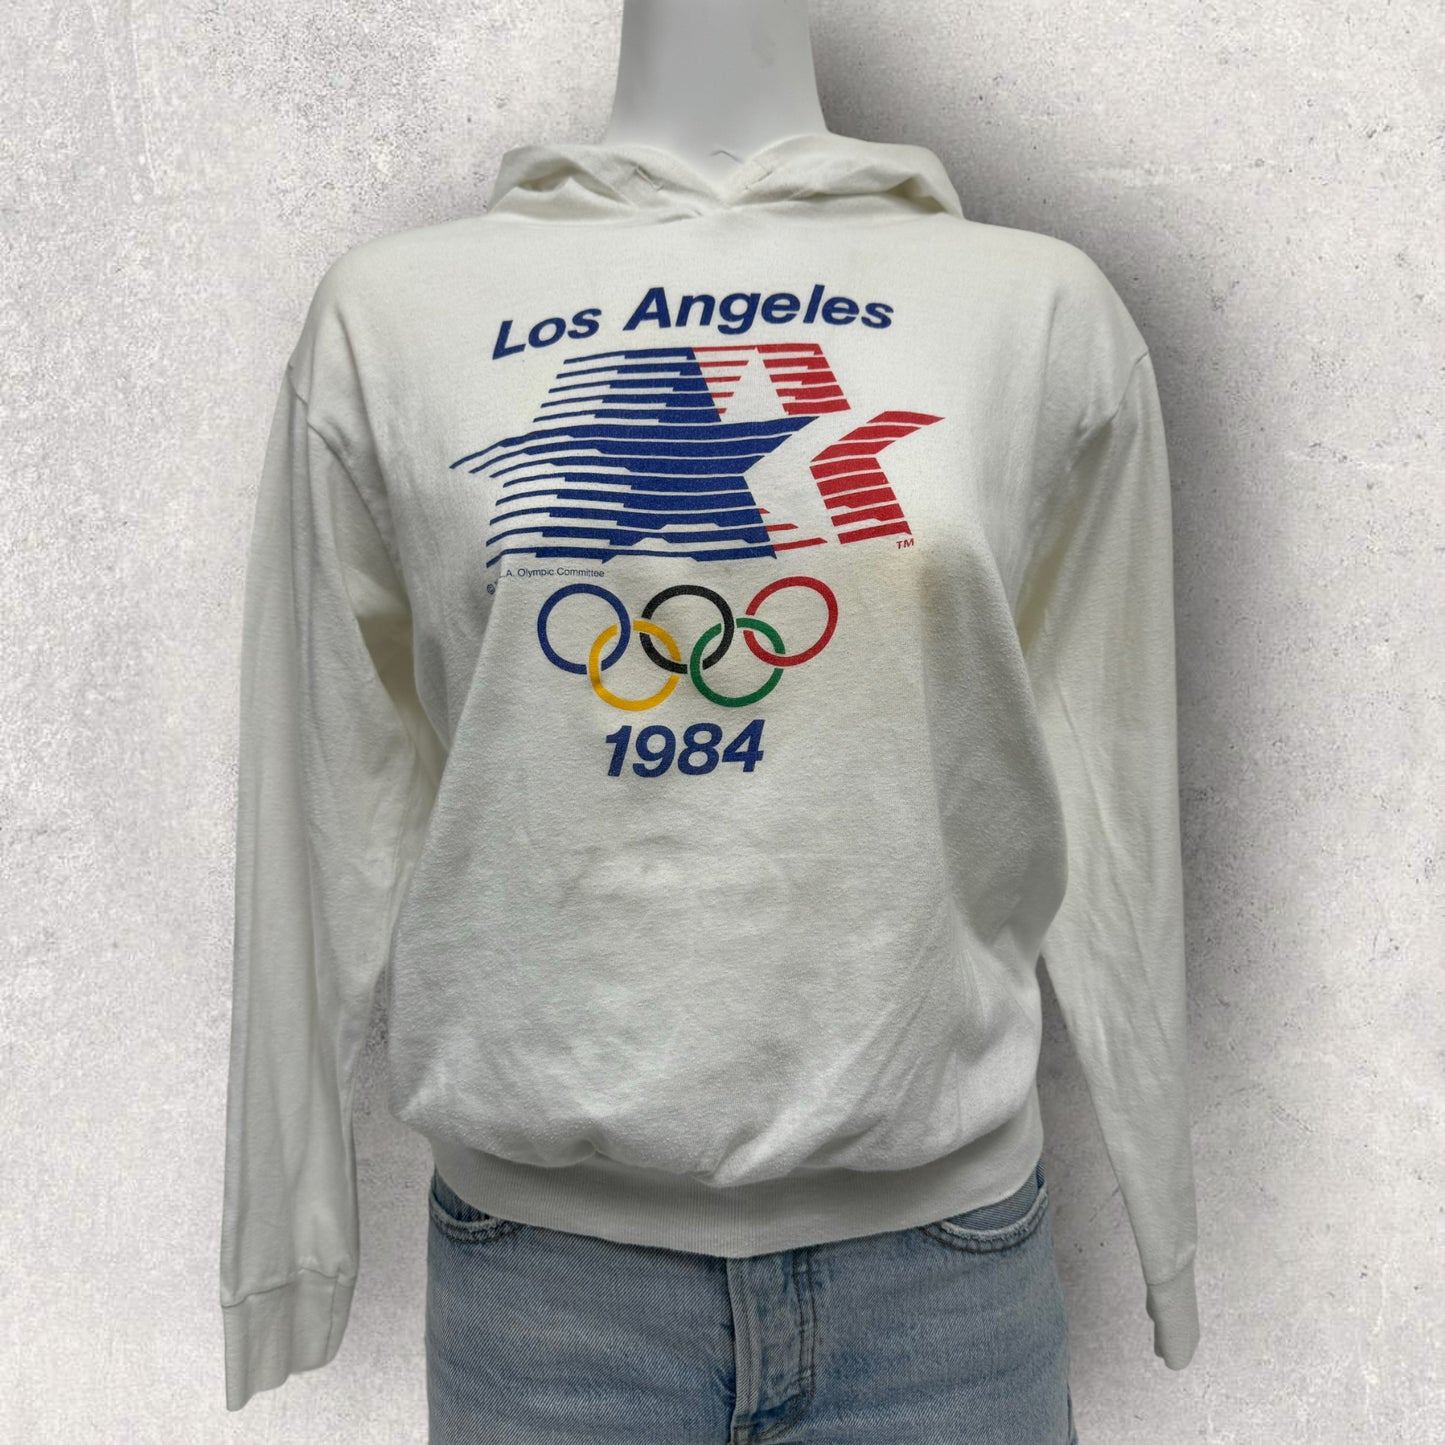 L.A. Olympic Hoodie L/S